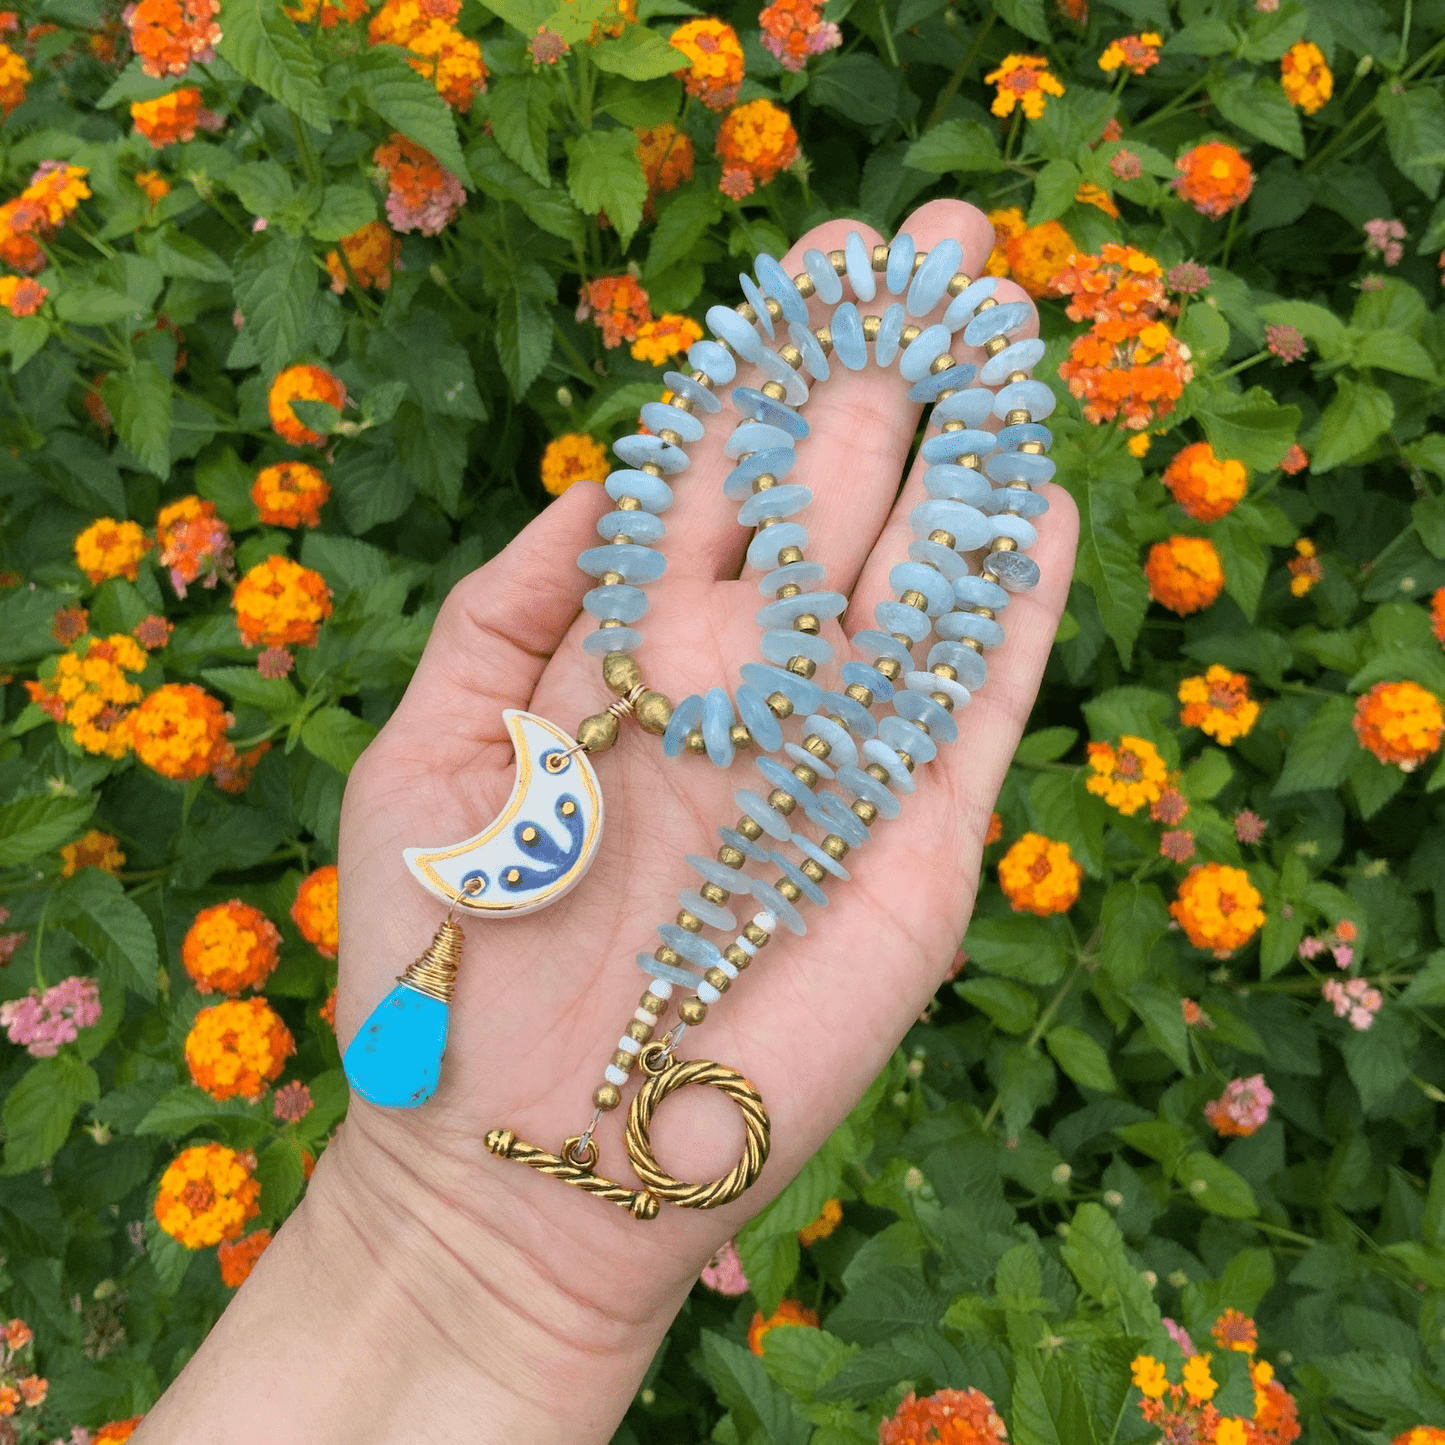 Indigo Moon and Aquamarine necklace